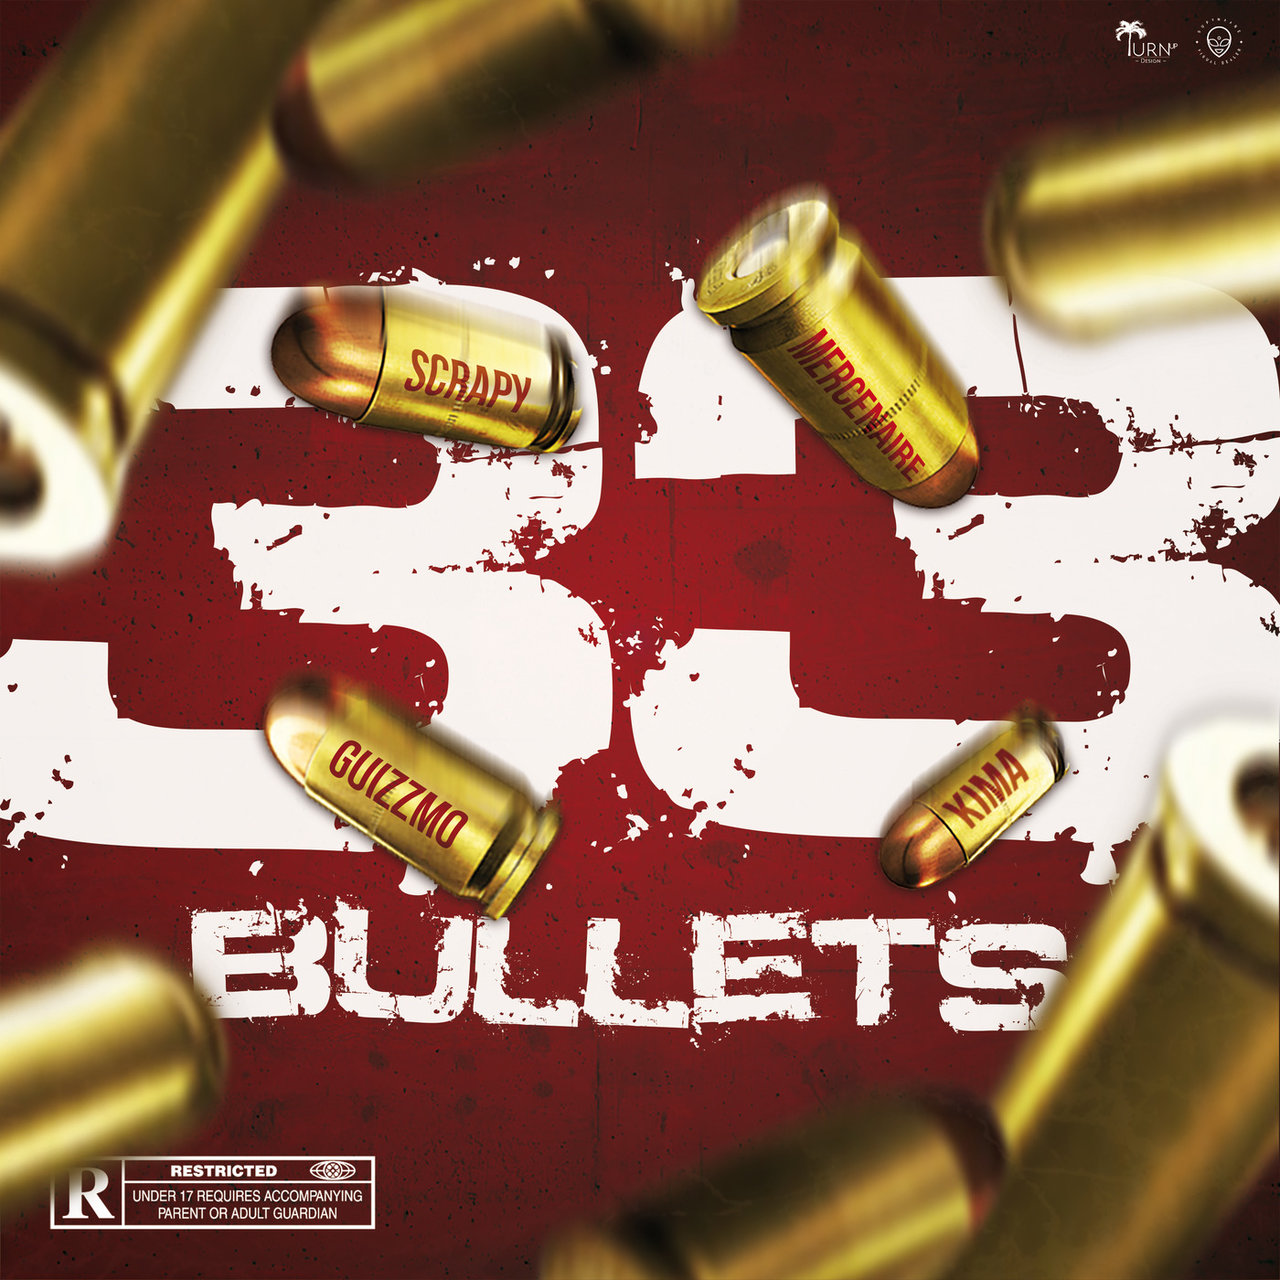 Mercenaire - 33 Bullets (ft. Kima, Scrapy and Gizzmoo) (Cover)